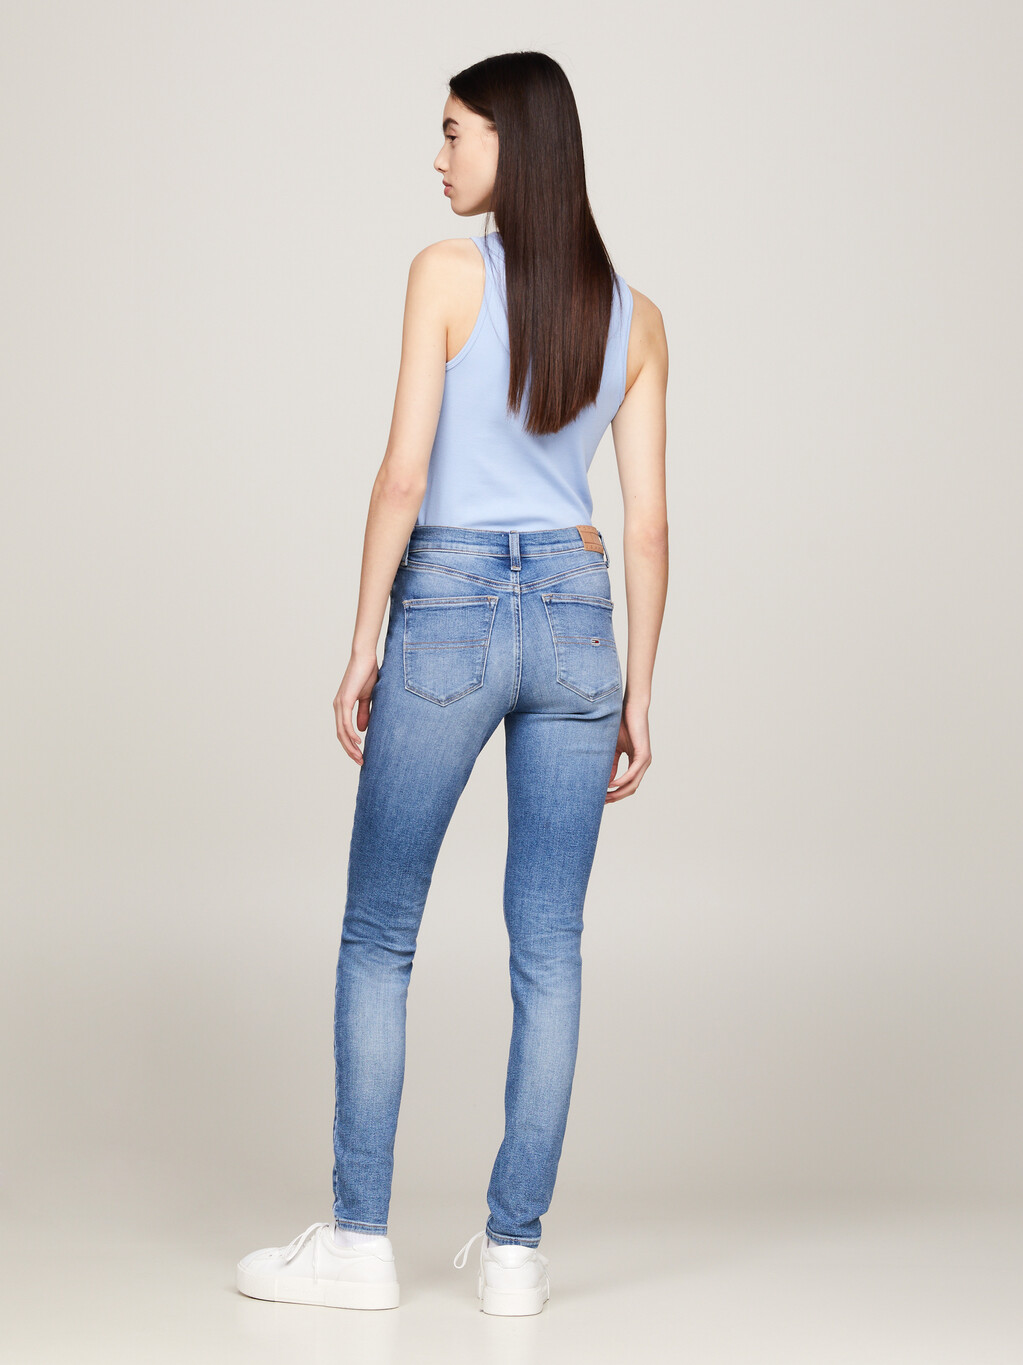 Nora Mid Rise Skinny Faded Jeans, Denim Medium, hi-res